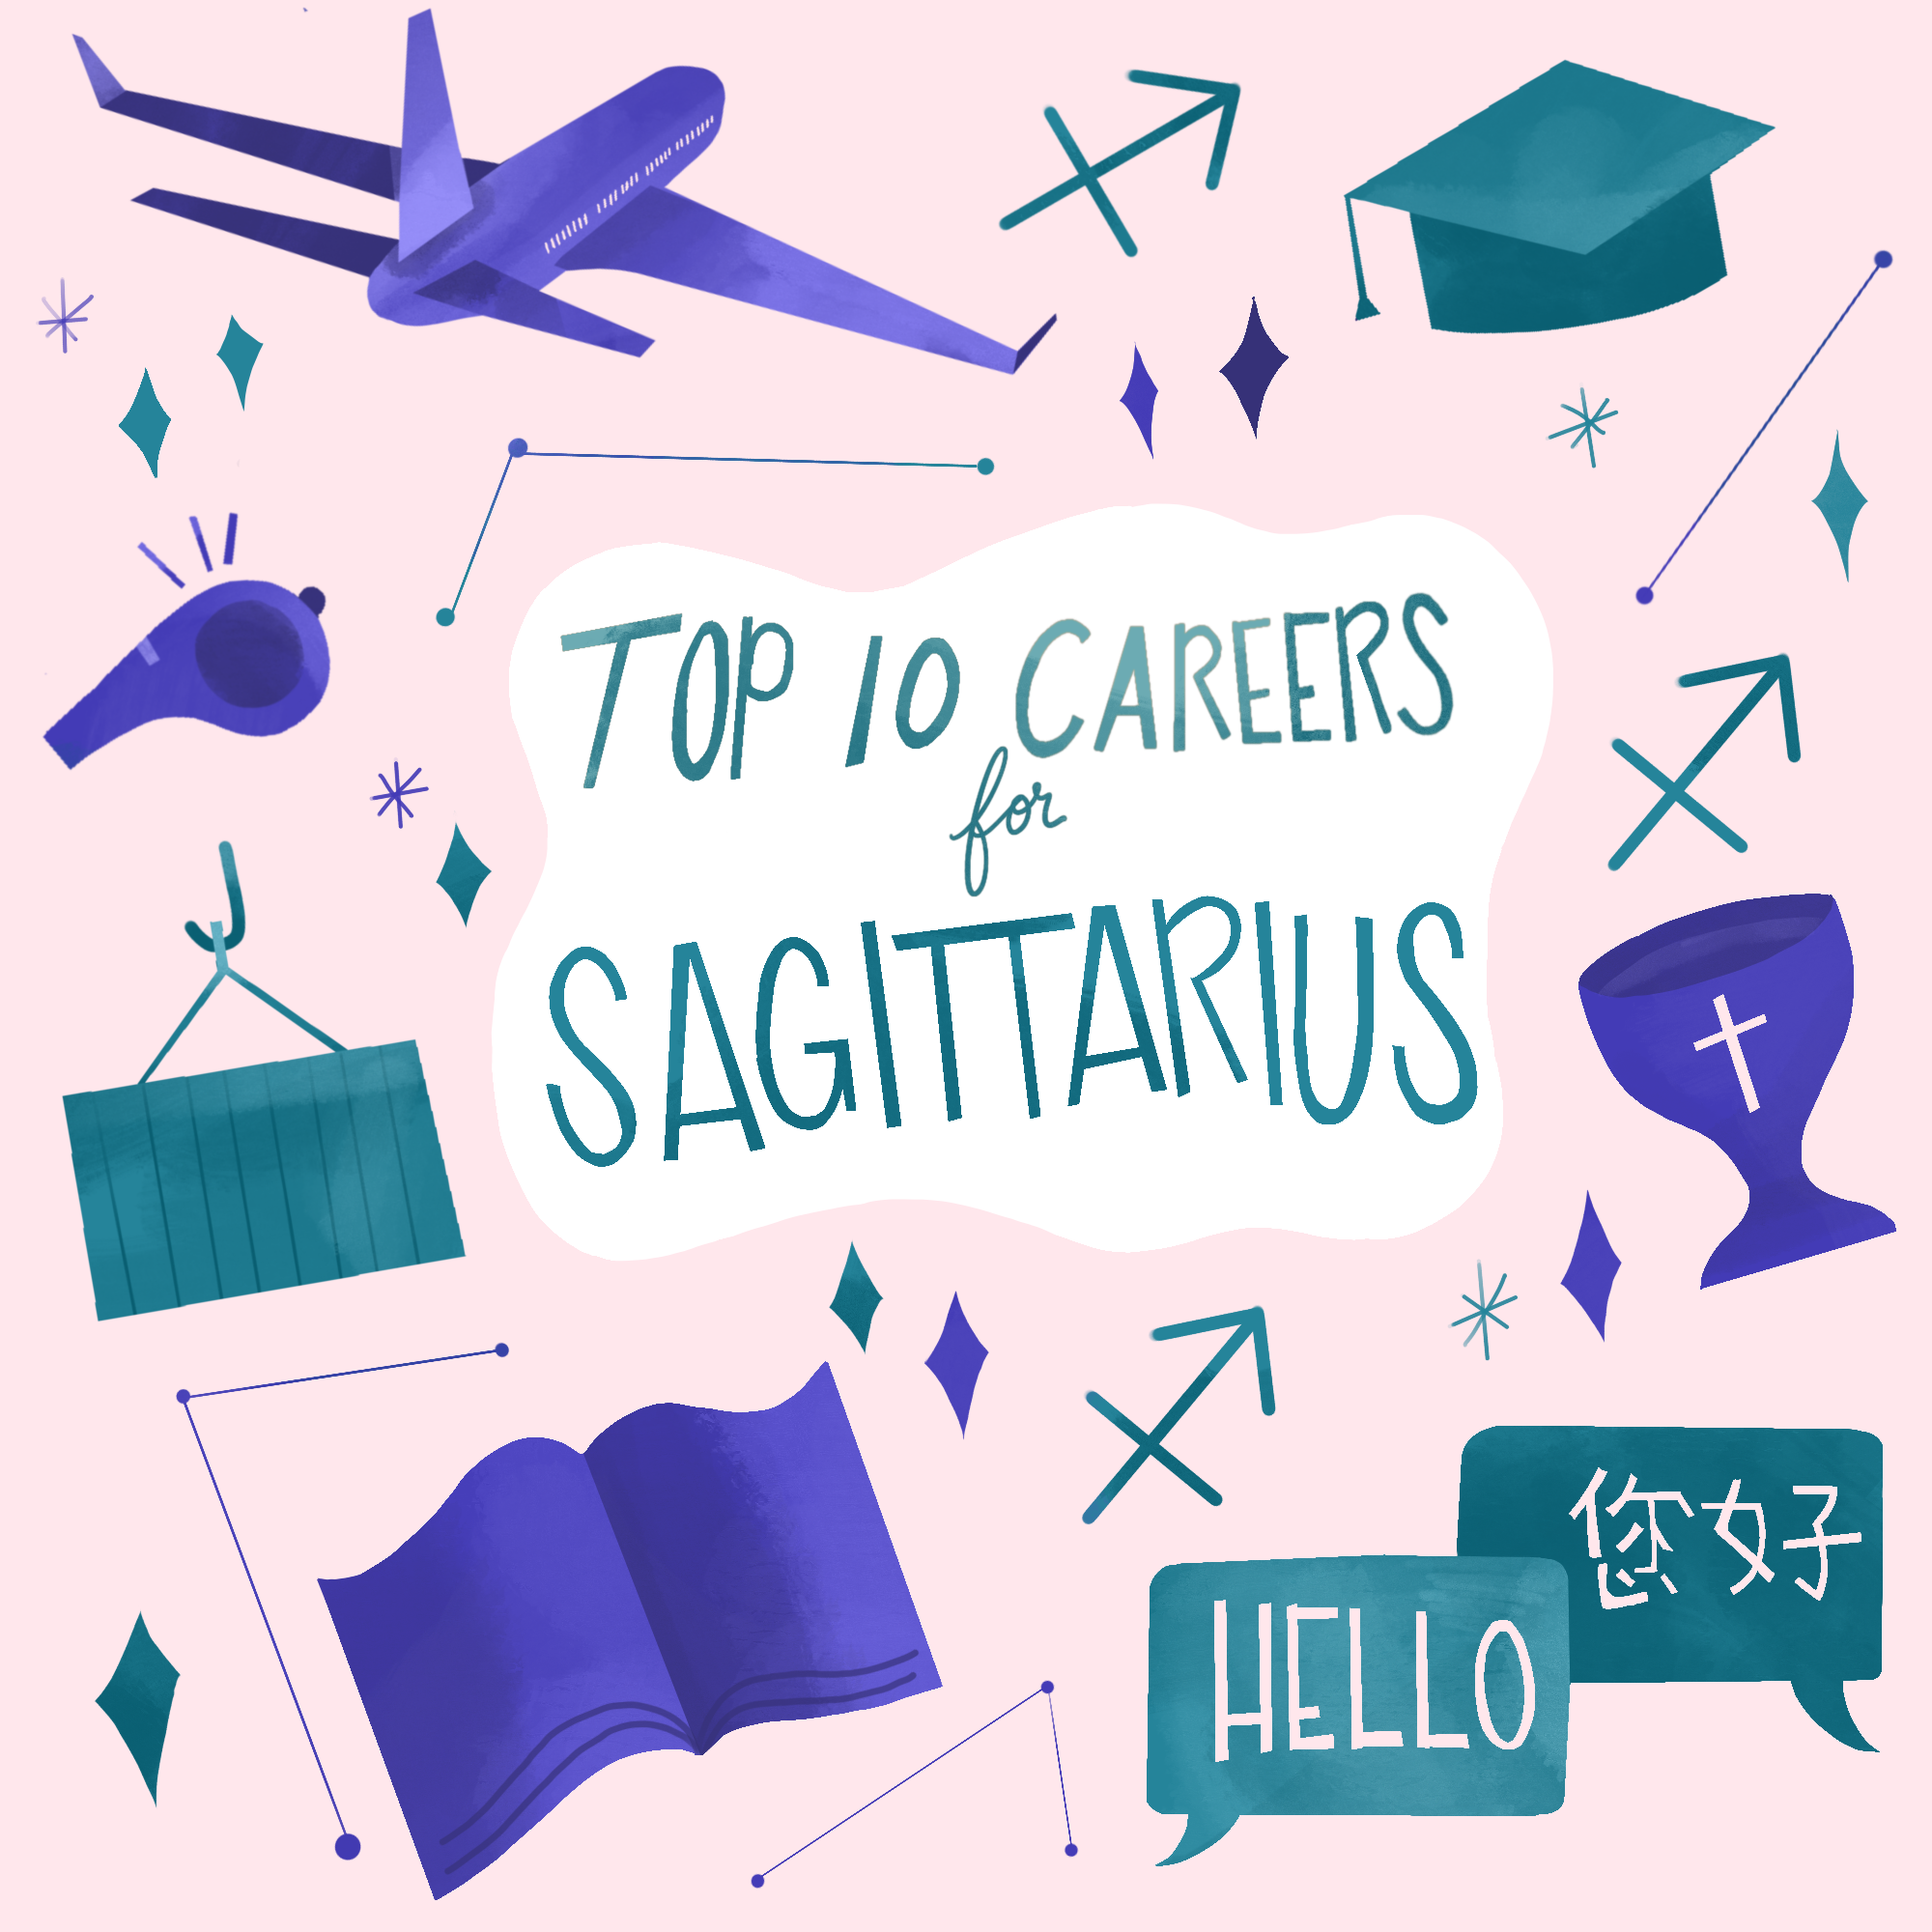 Top 10 Careers for Sagittarius